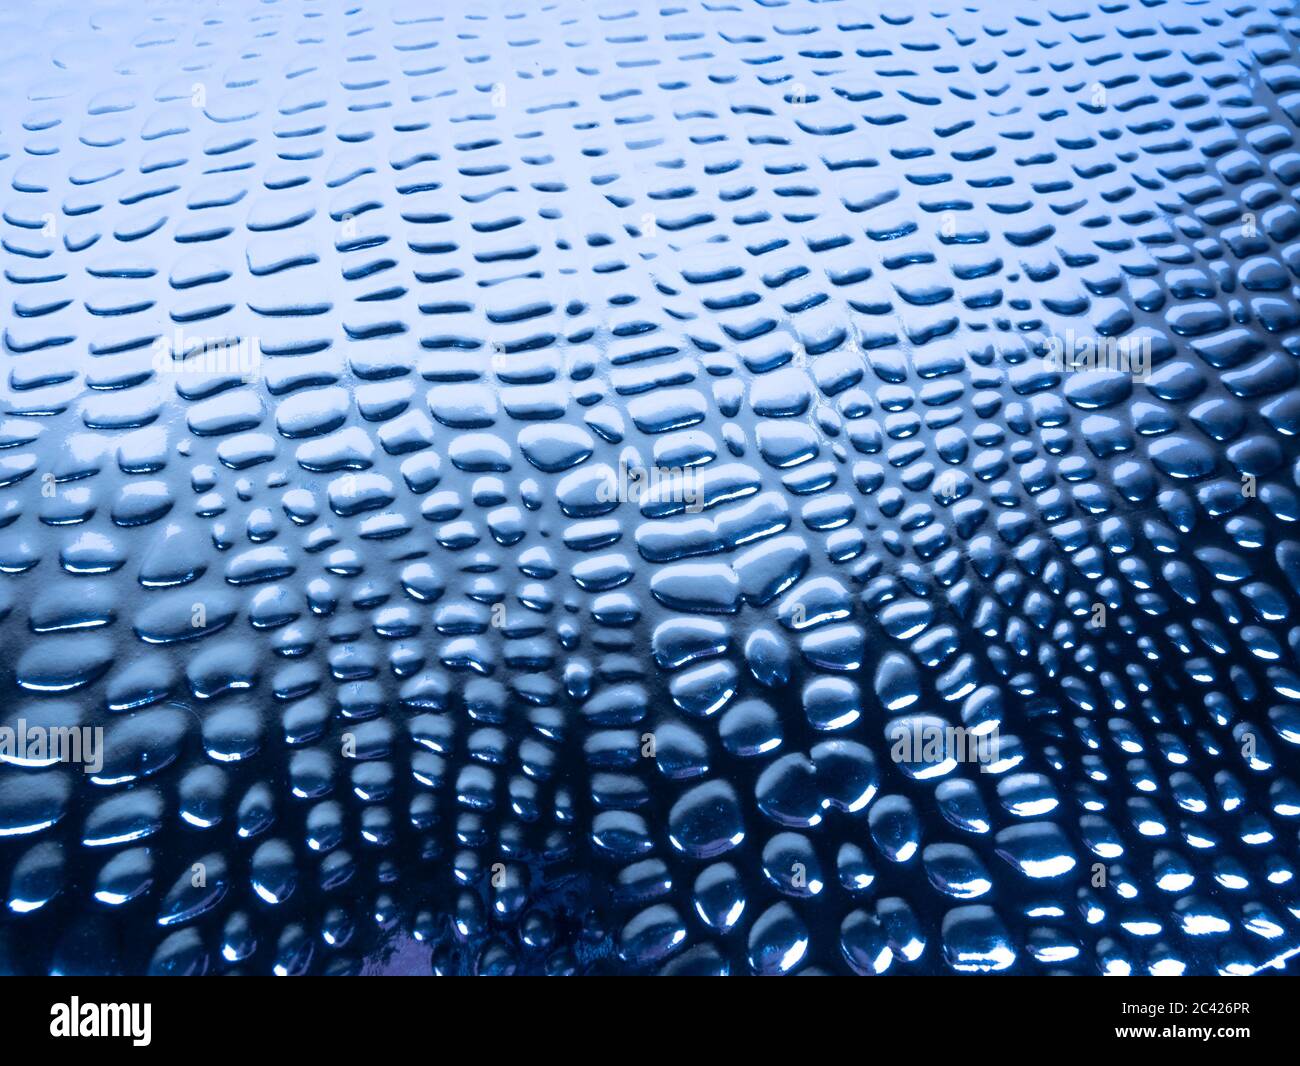 Close-up blue metallic snake skin background Stock Photo